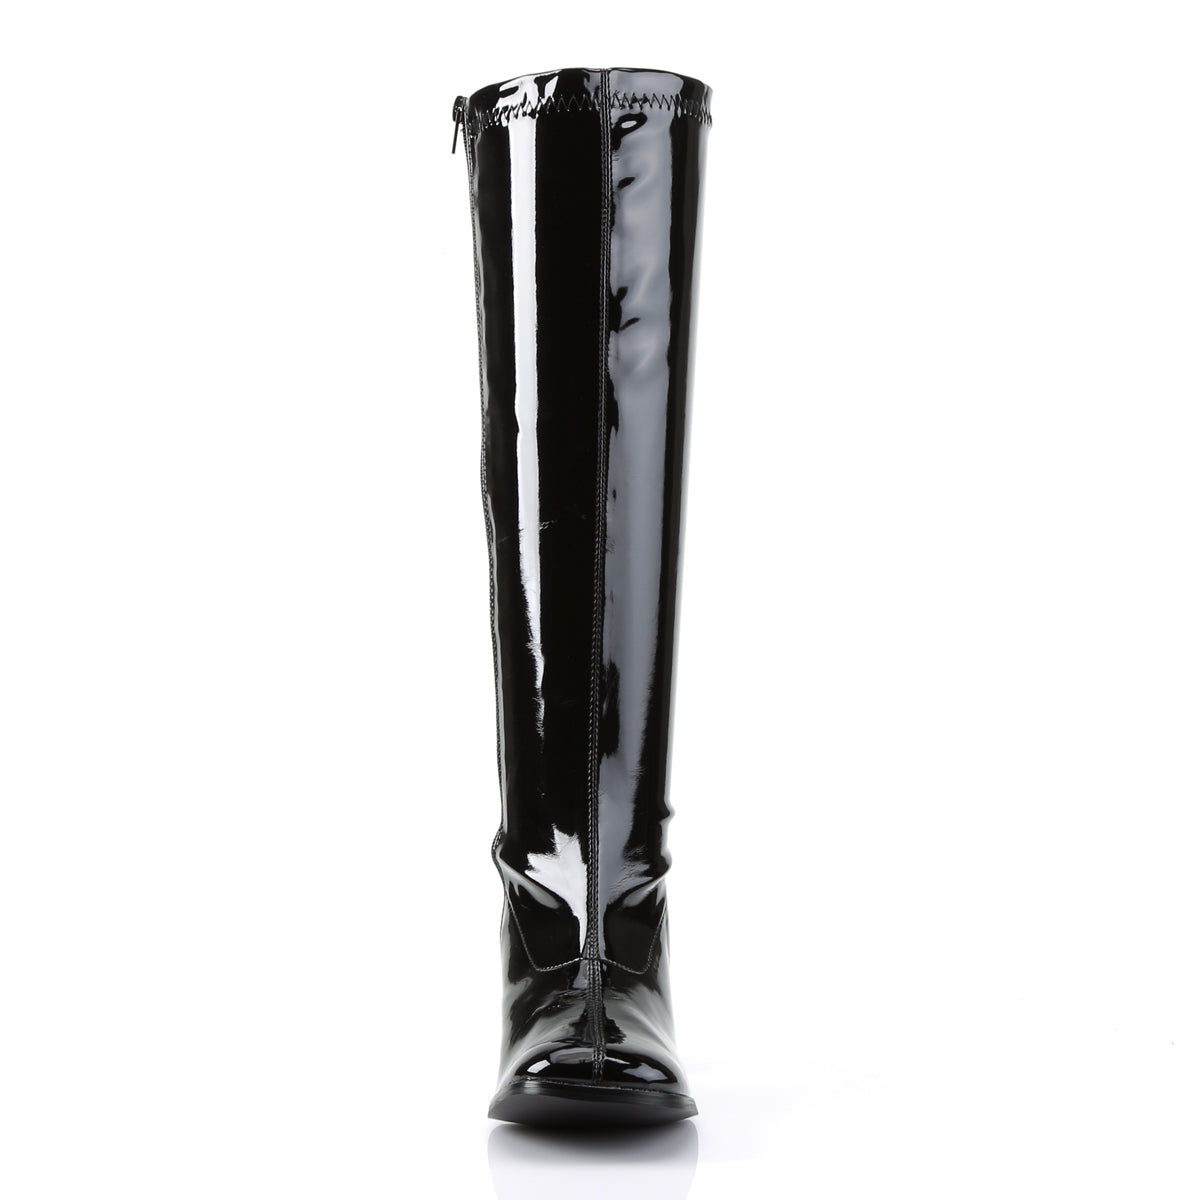 GOGO-300WC Funtasma Fantasy Black Stretch Patent Plus Sizes & Wide Width/Shaft [Retro Knee High Boots]